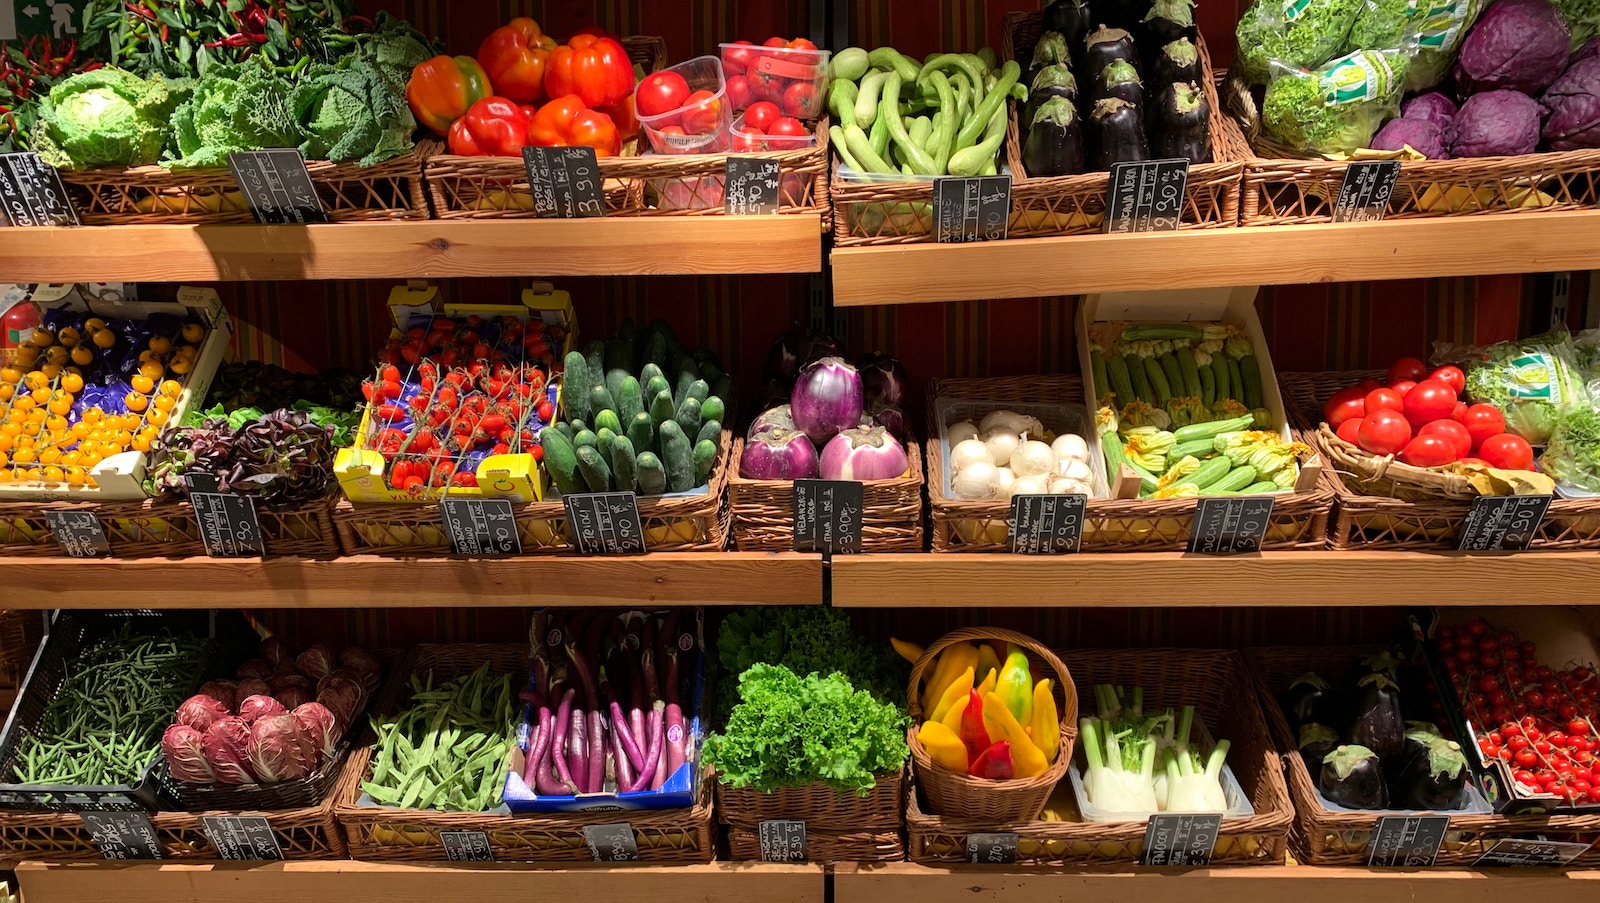 Food storage product keeps produce fresher for 80% longer